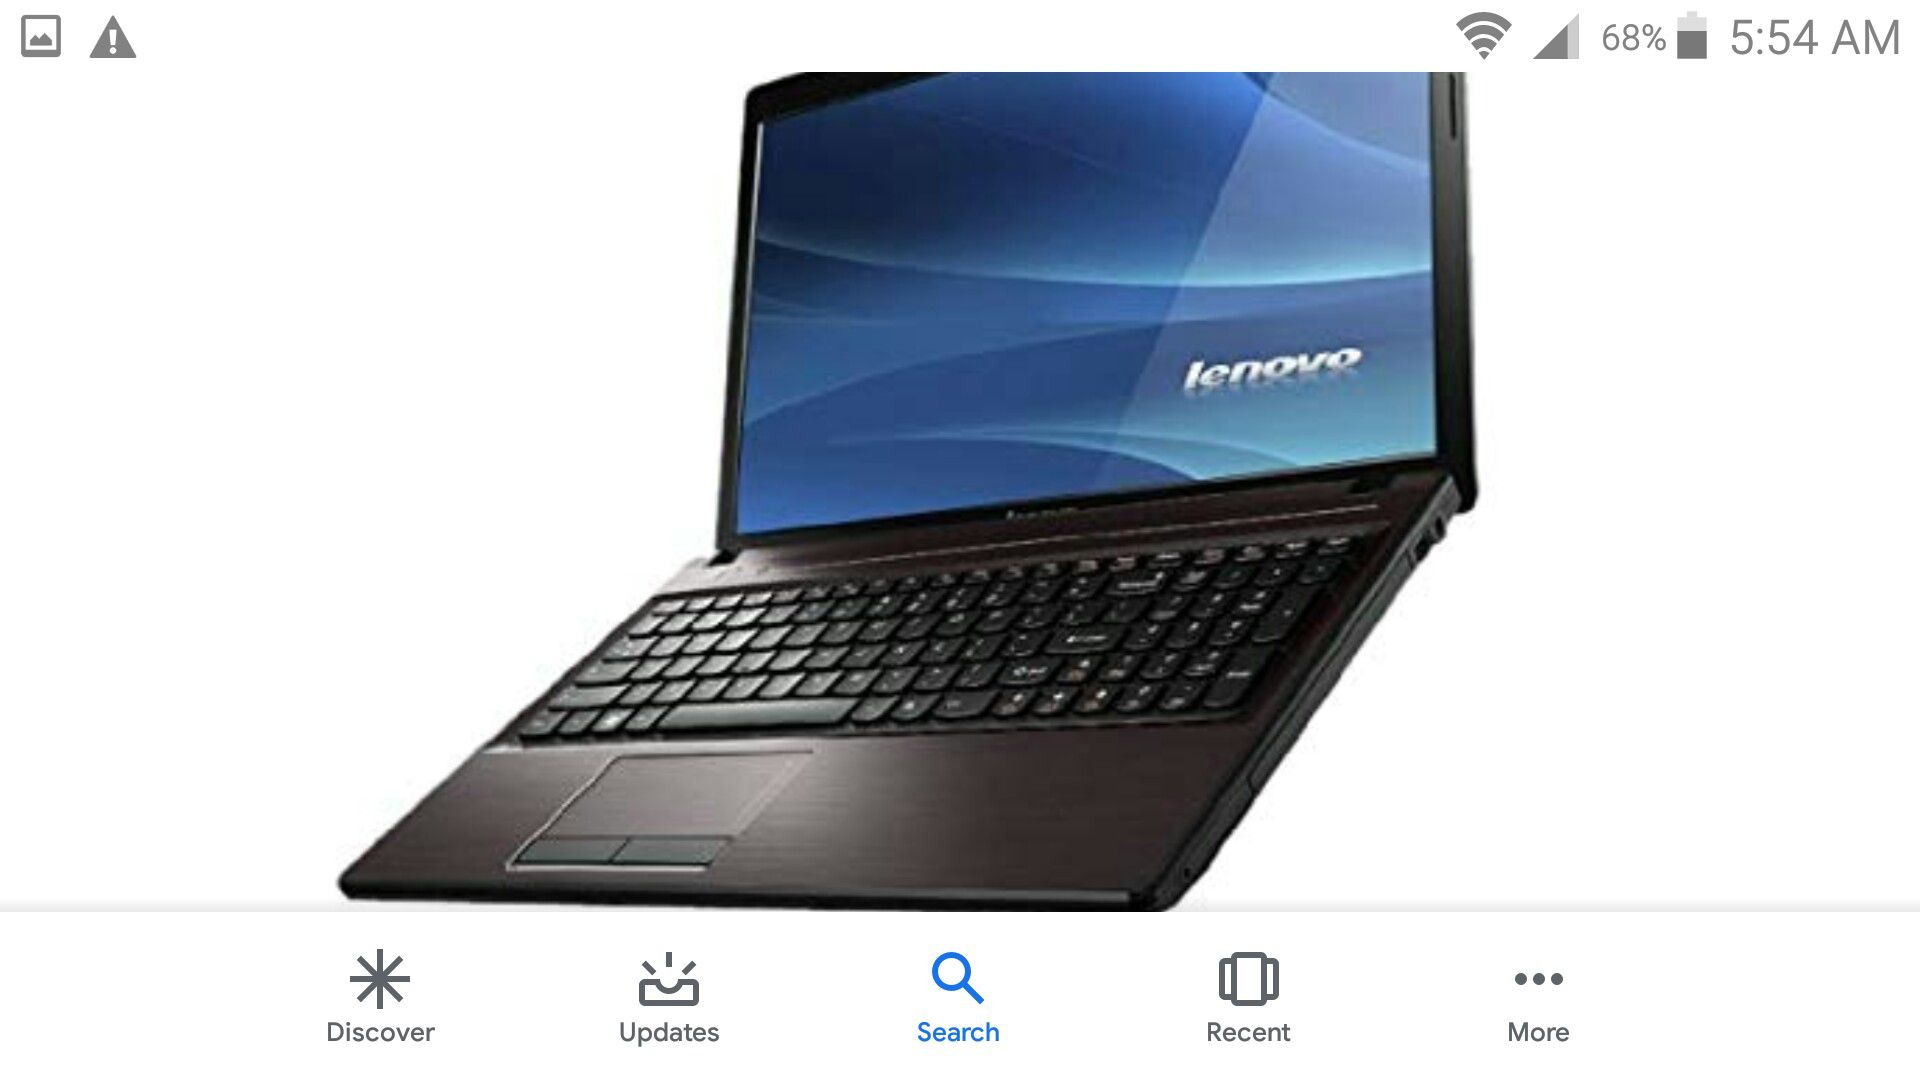 Lenovo windows 8 laptop